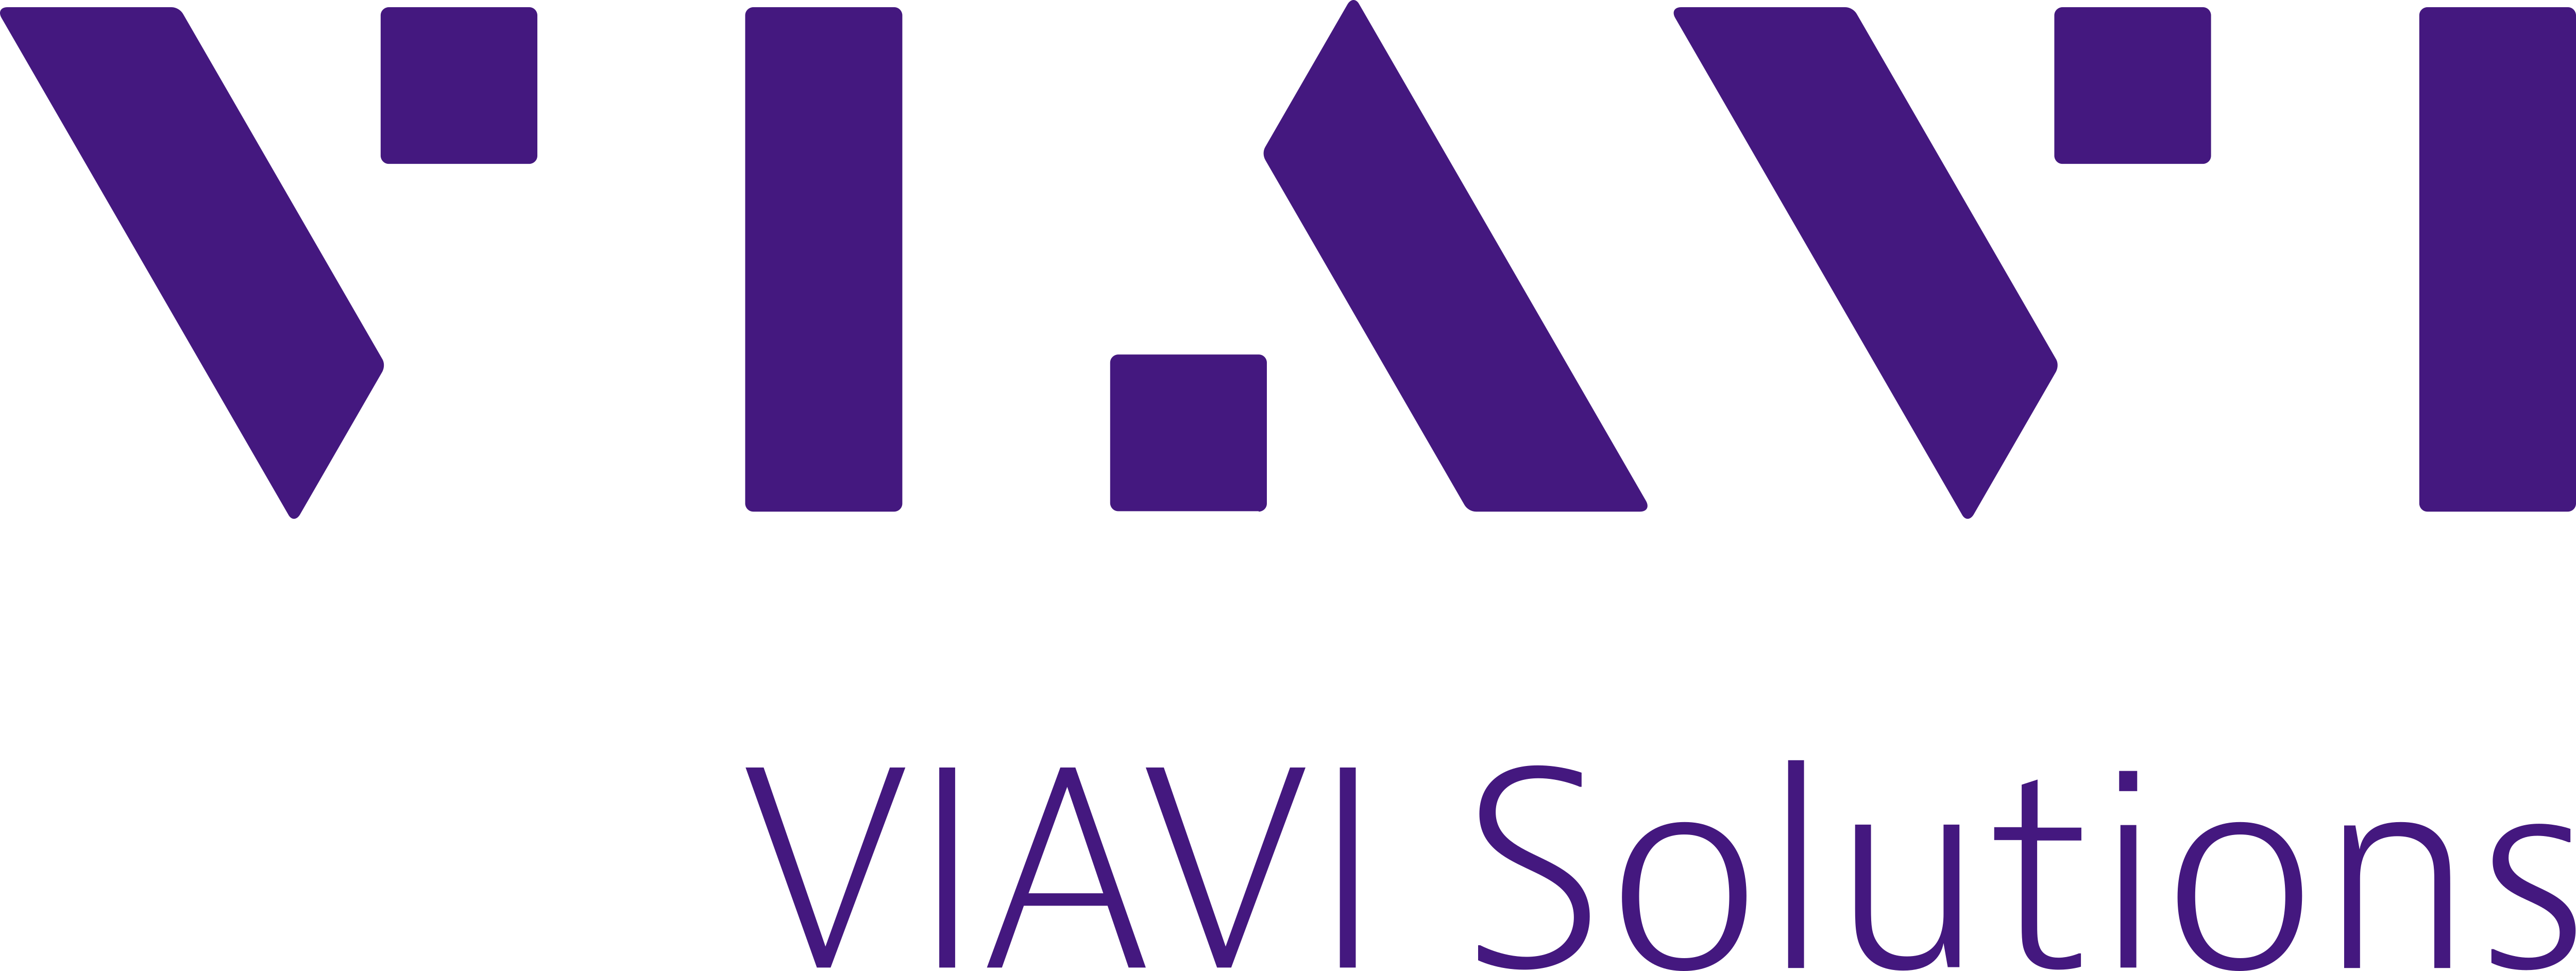 VIAVI Solutions – Logos Download